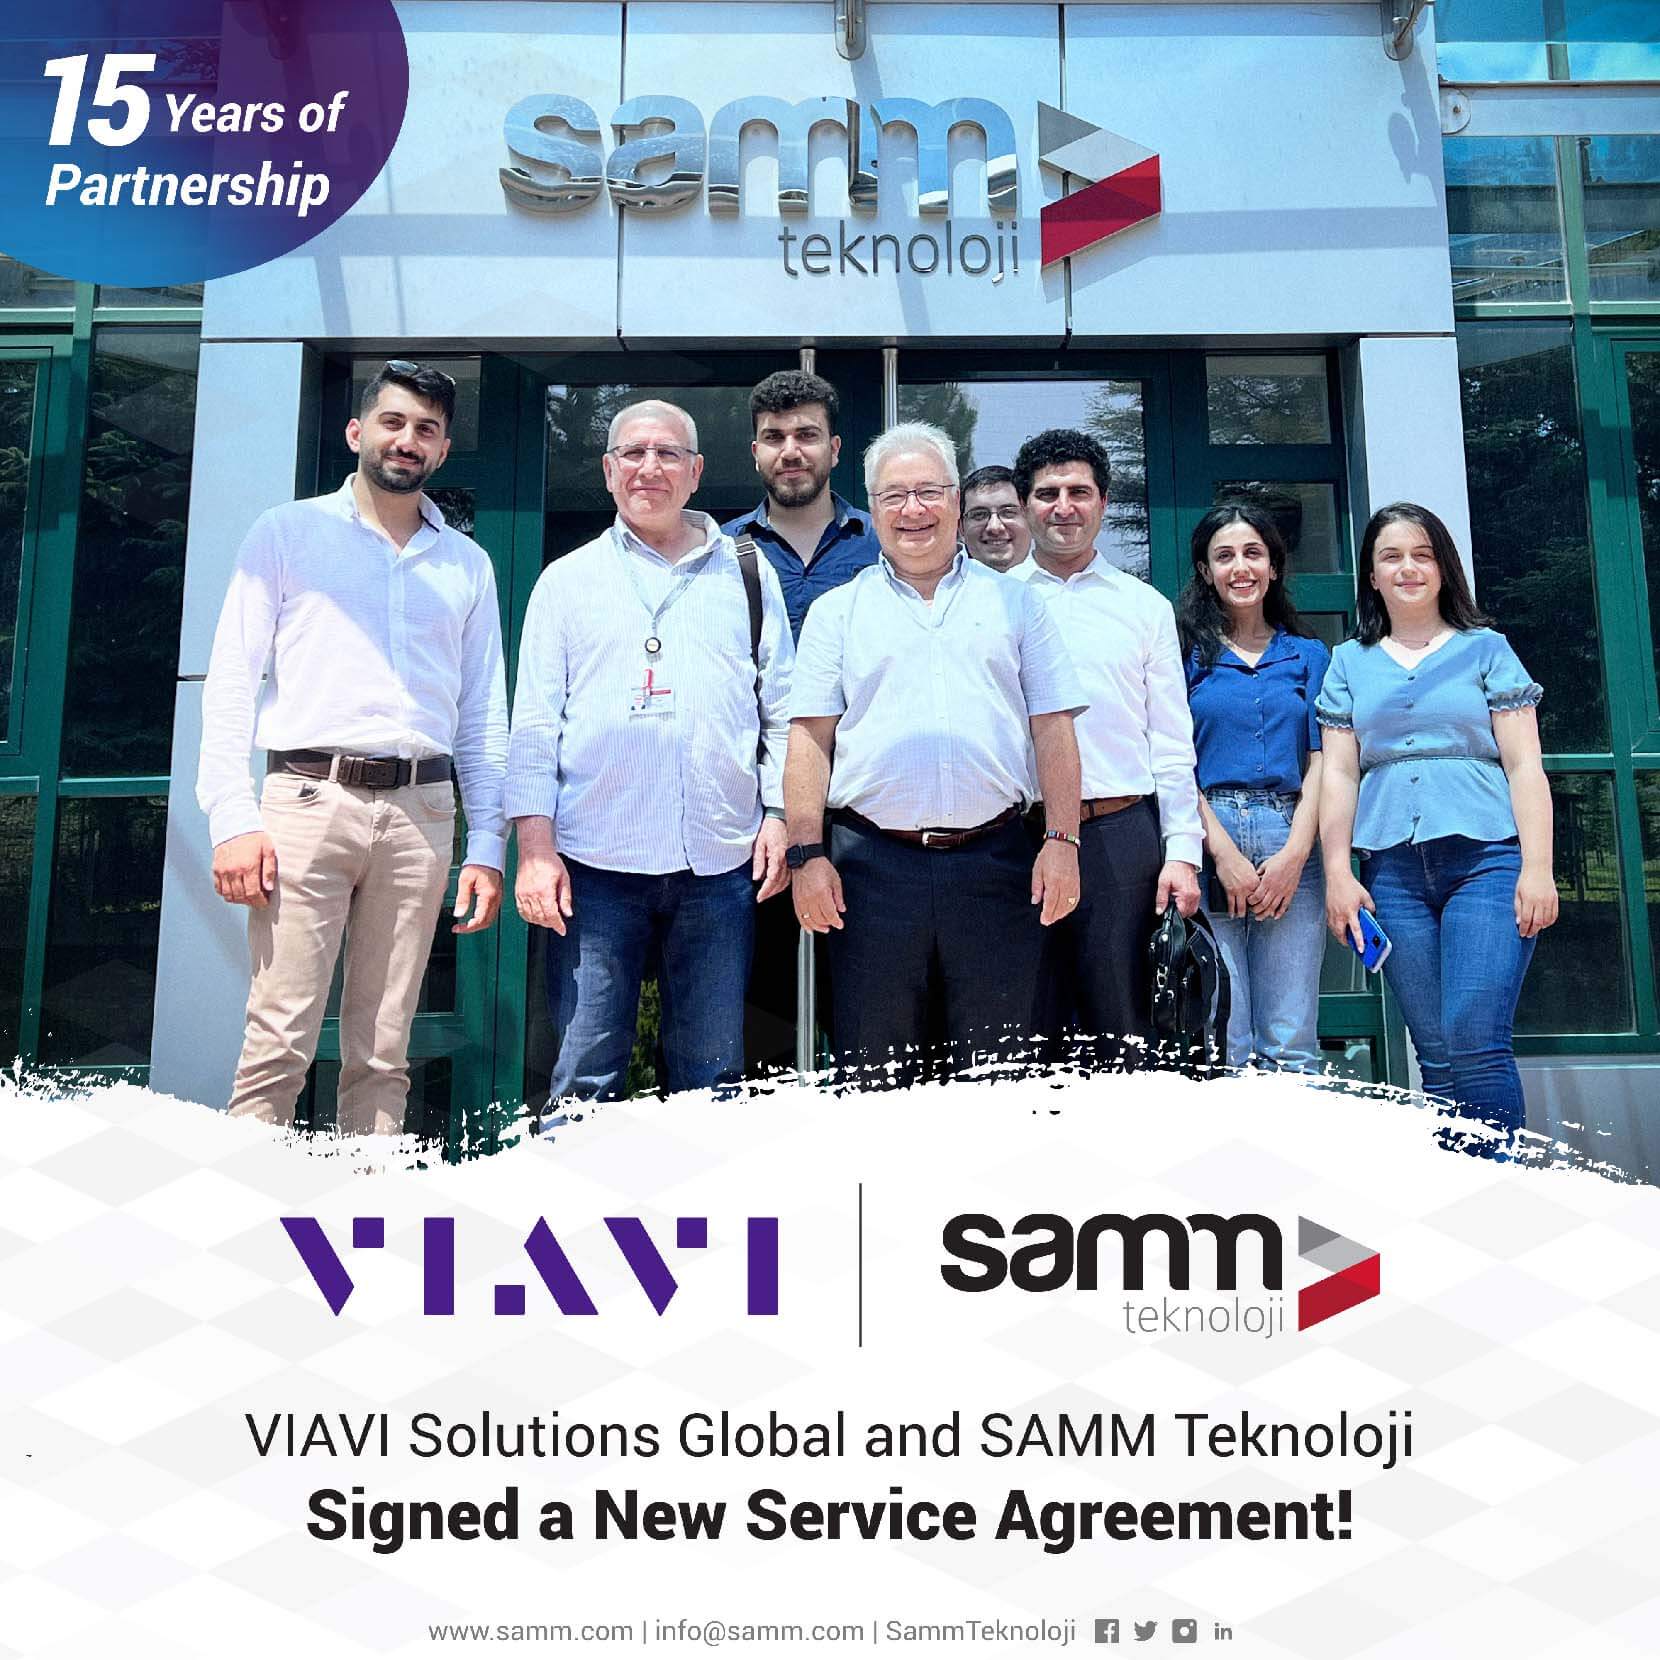 Viavi Solutions Global and SAMM Teknoloji Signed a New Service Agreement!